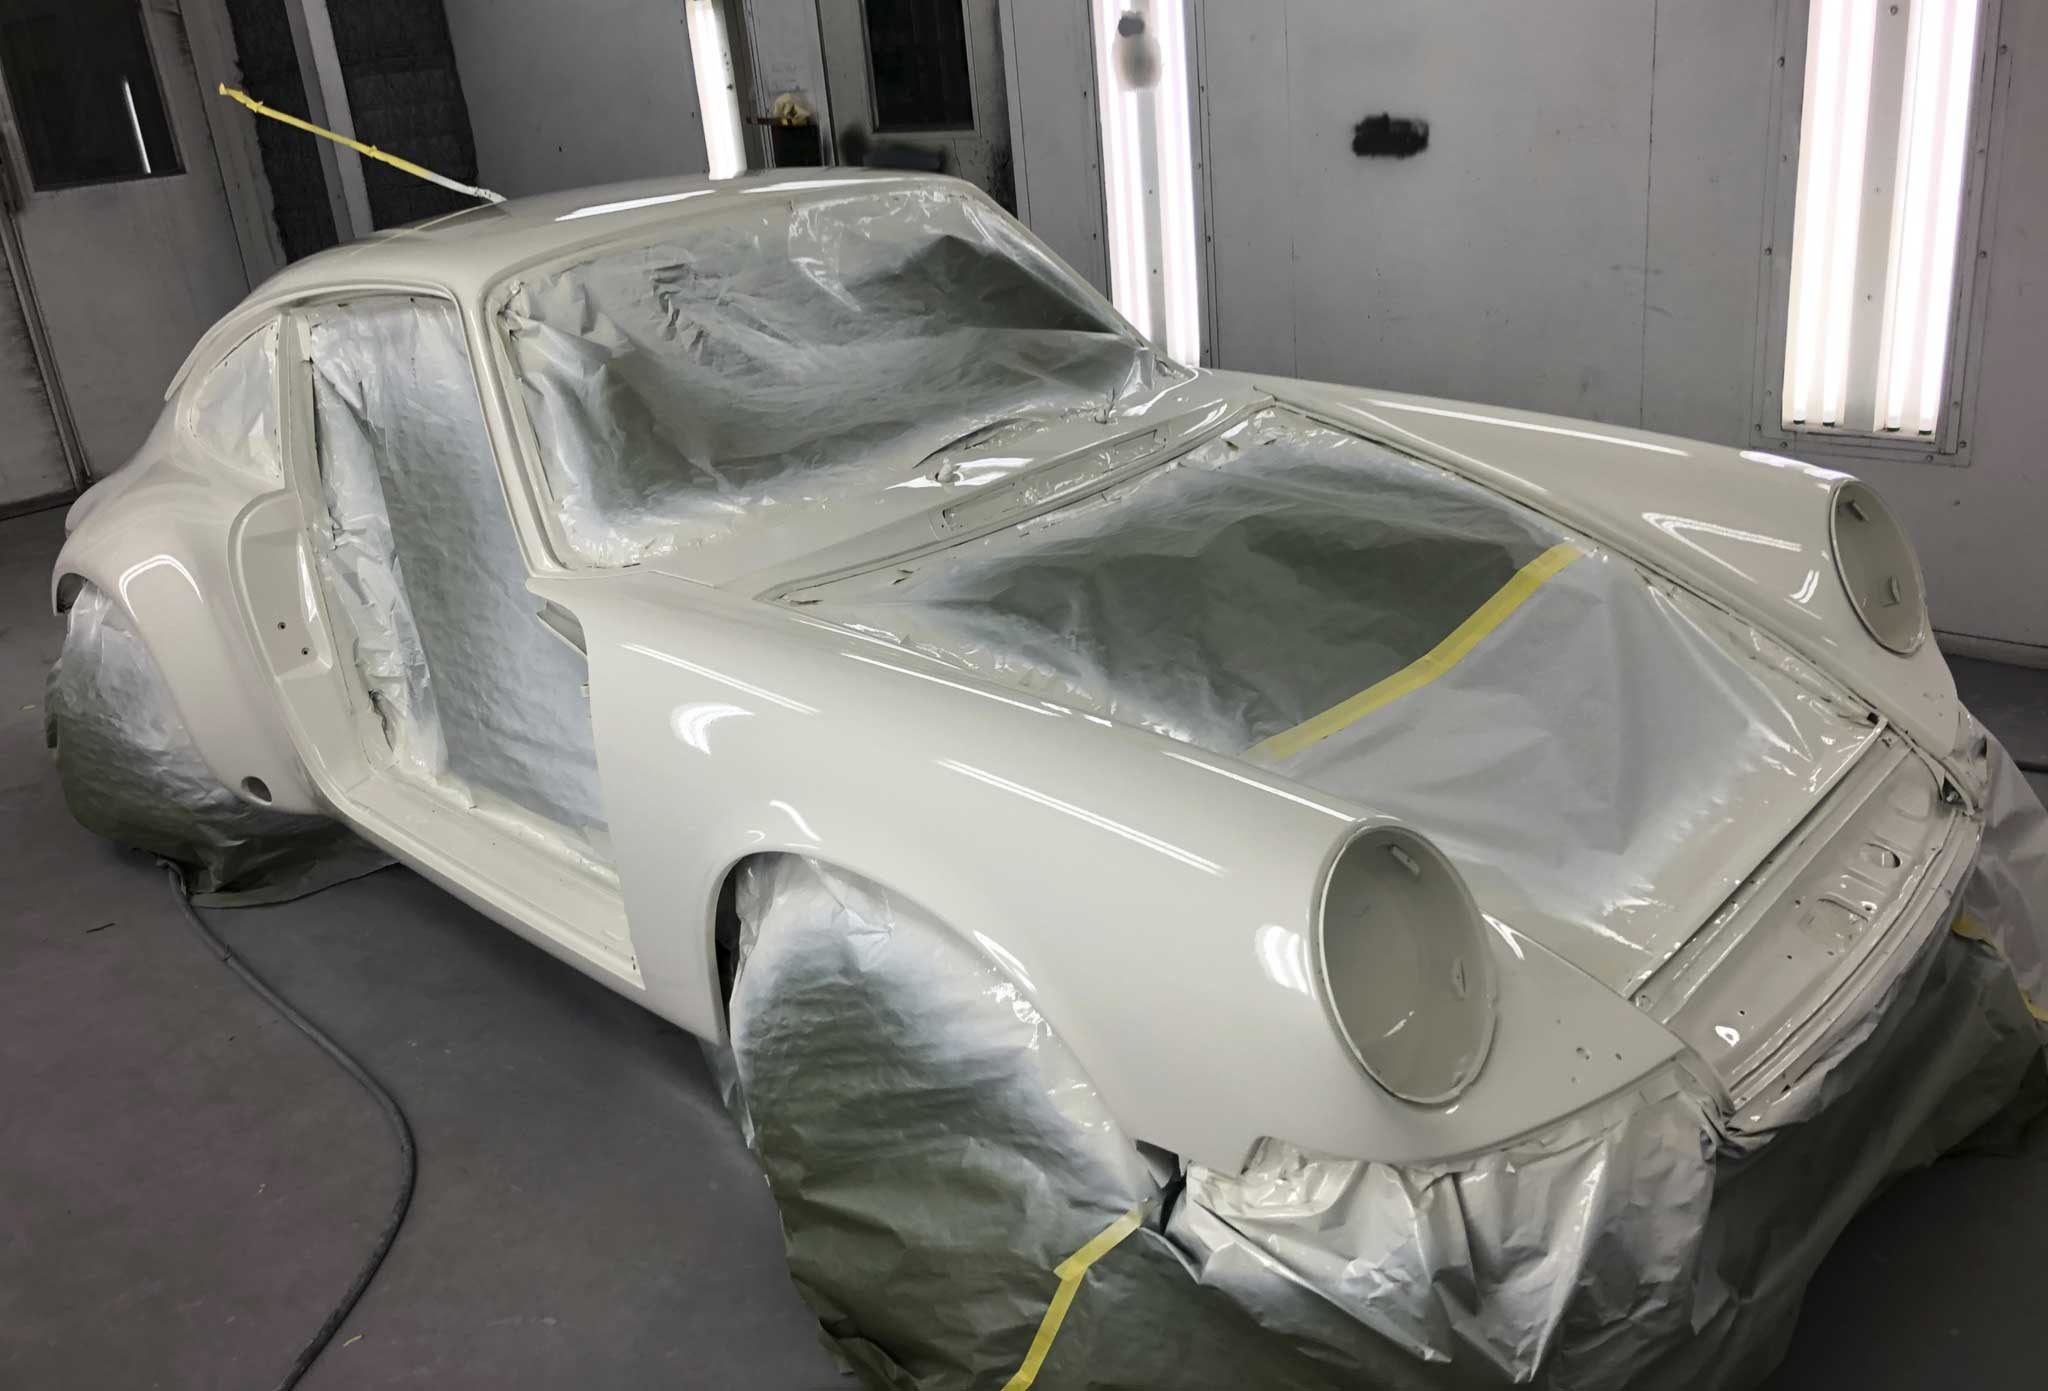 a Porsche 911 undergoes a paint job at Kudensport in Southern California